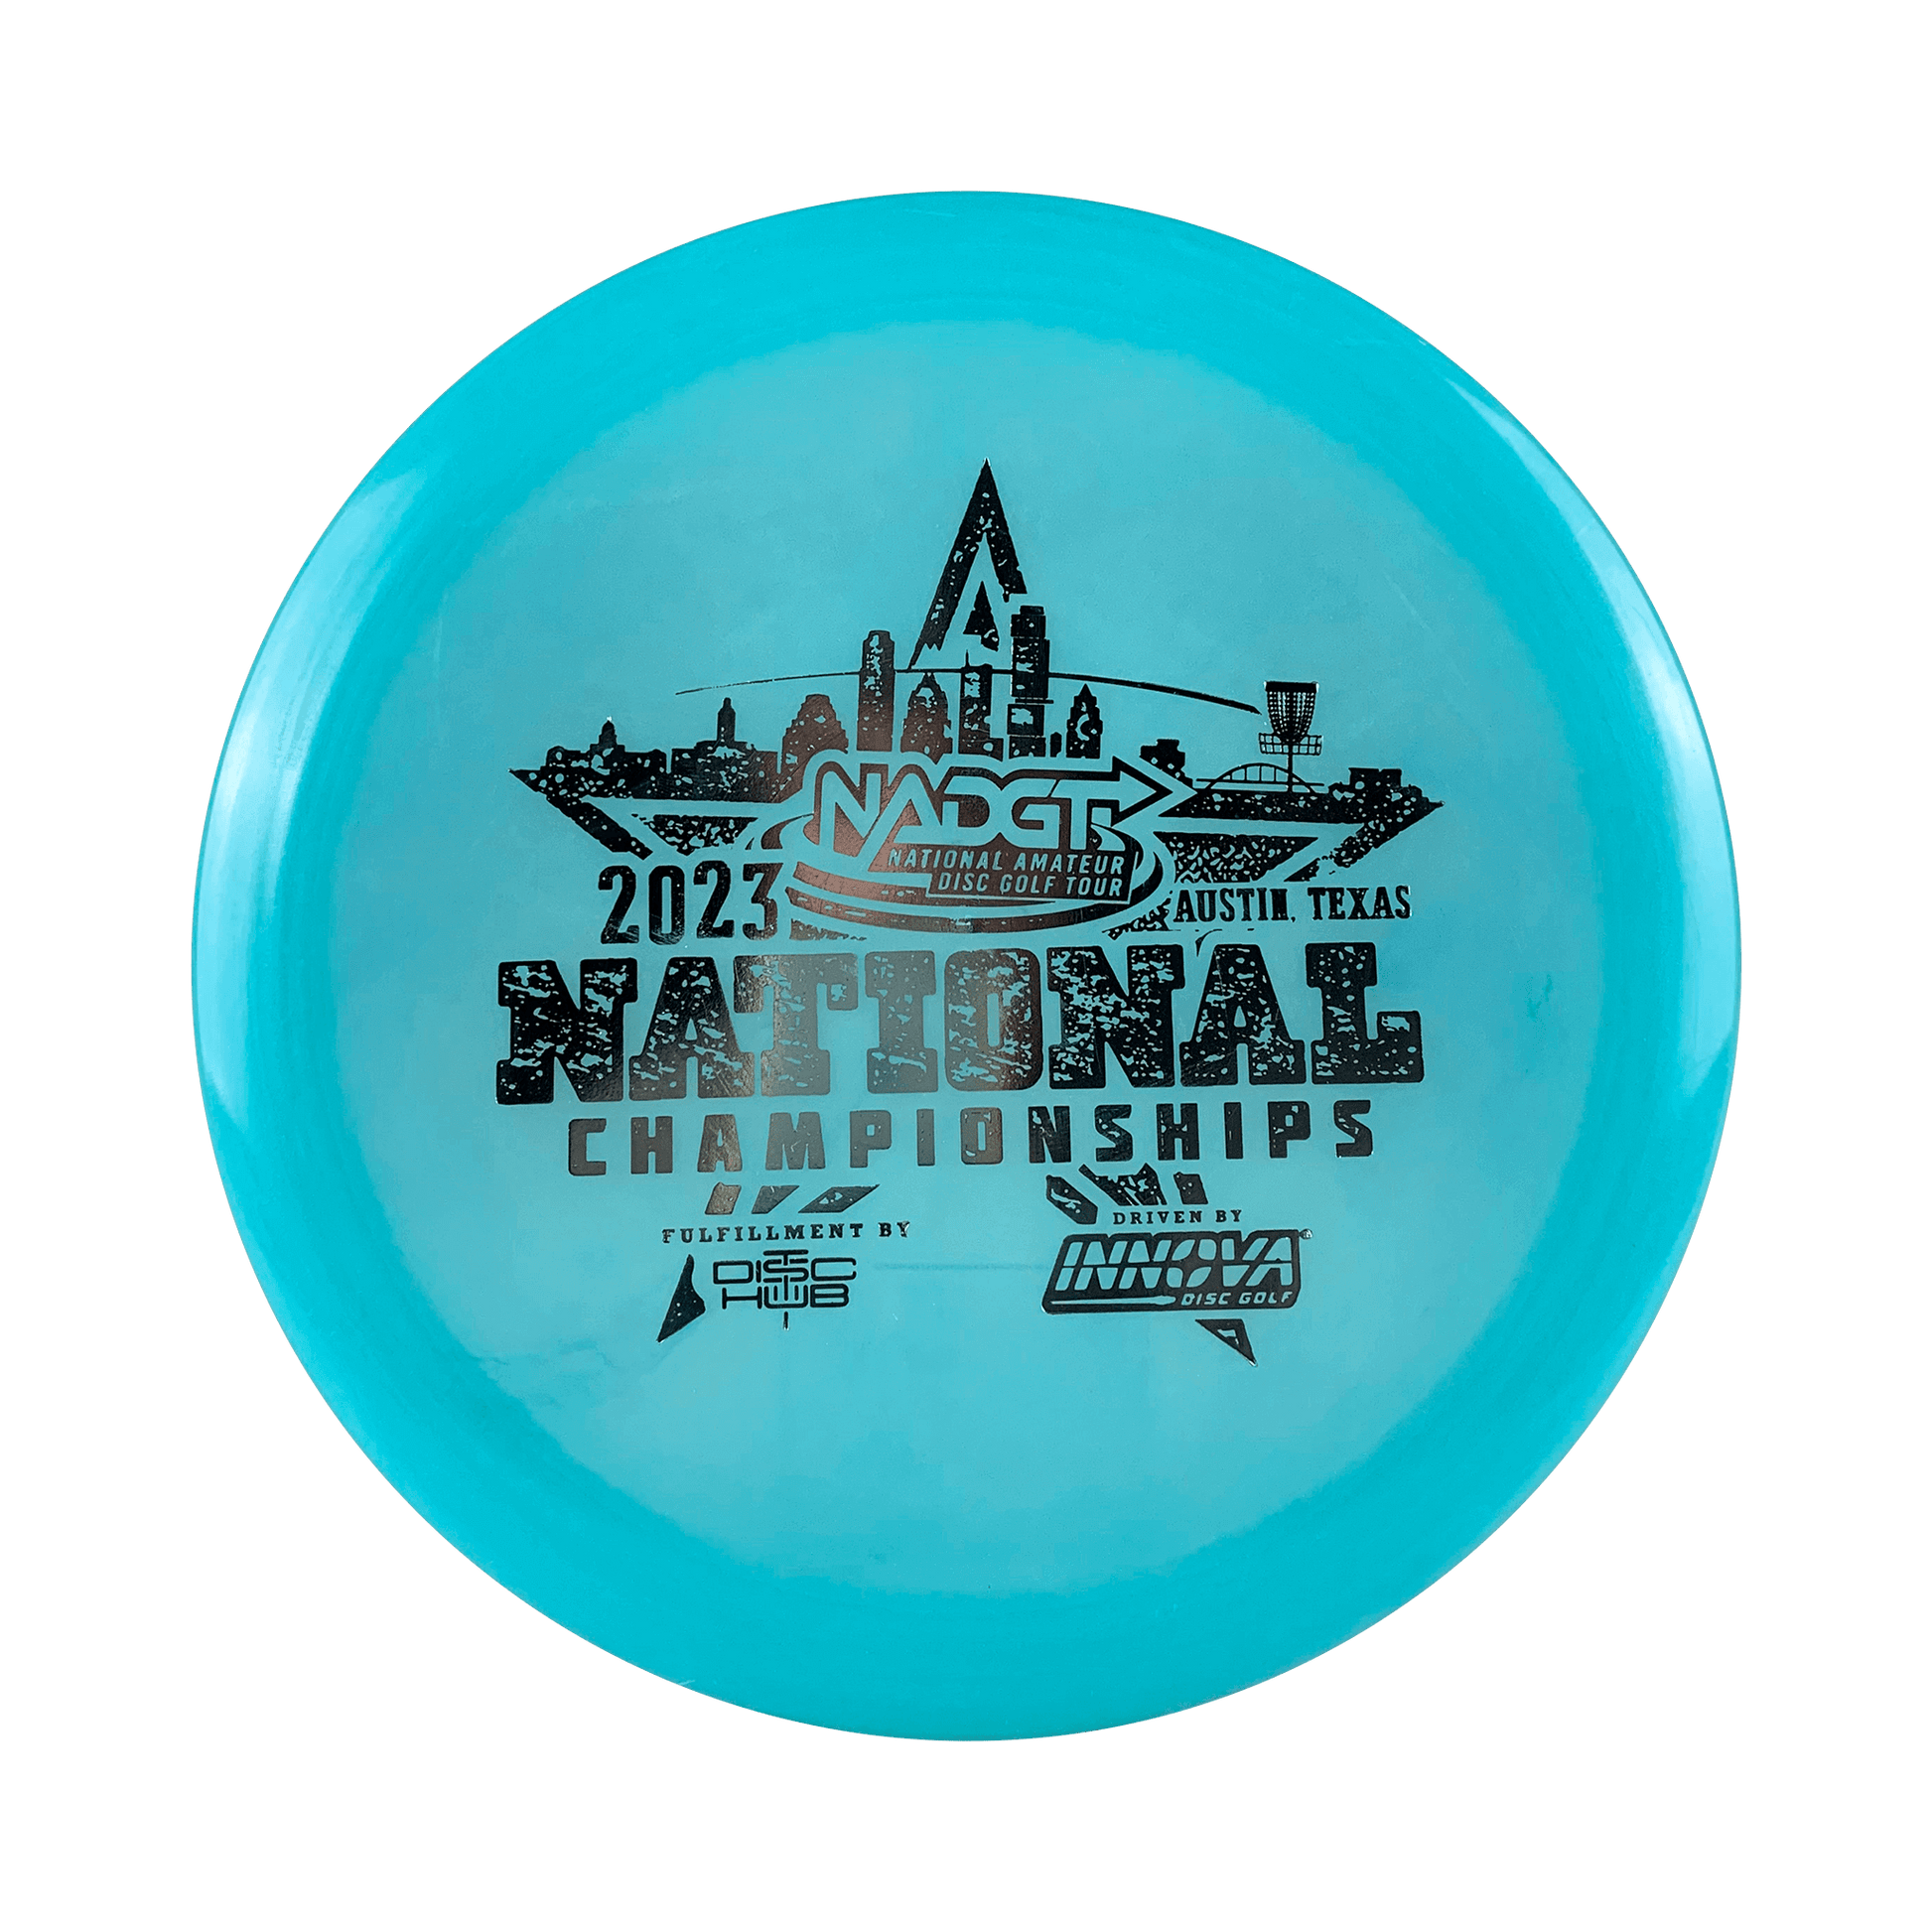 Color Glow Champion Teebird3 - NADGT National Championship 2023 Disc Innova blue glow 165 